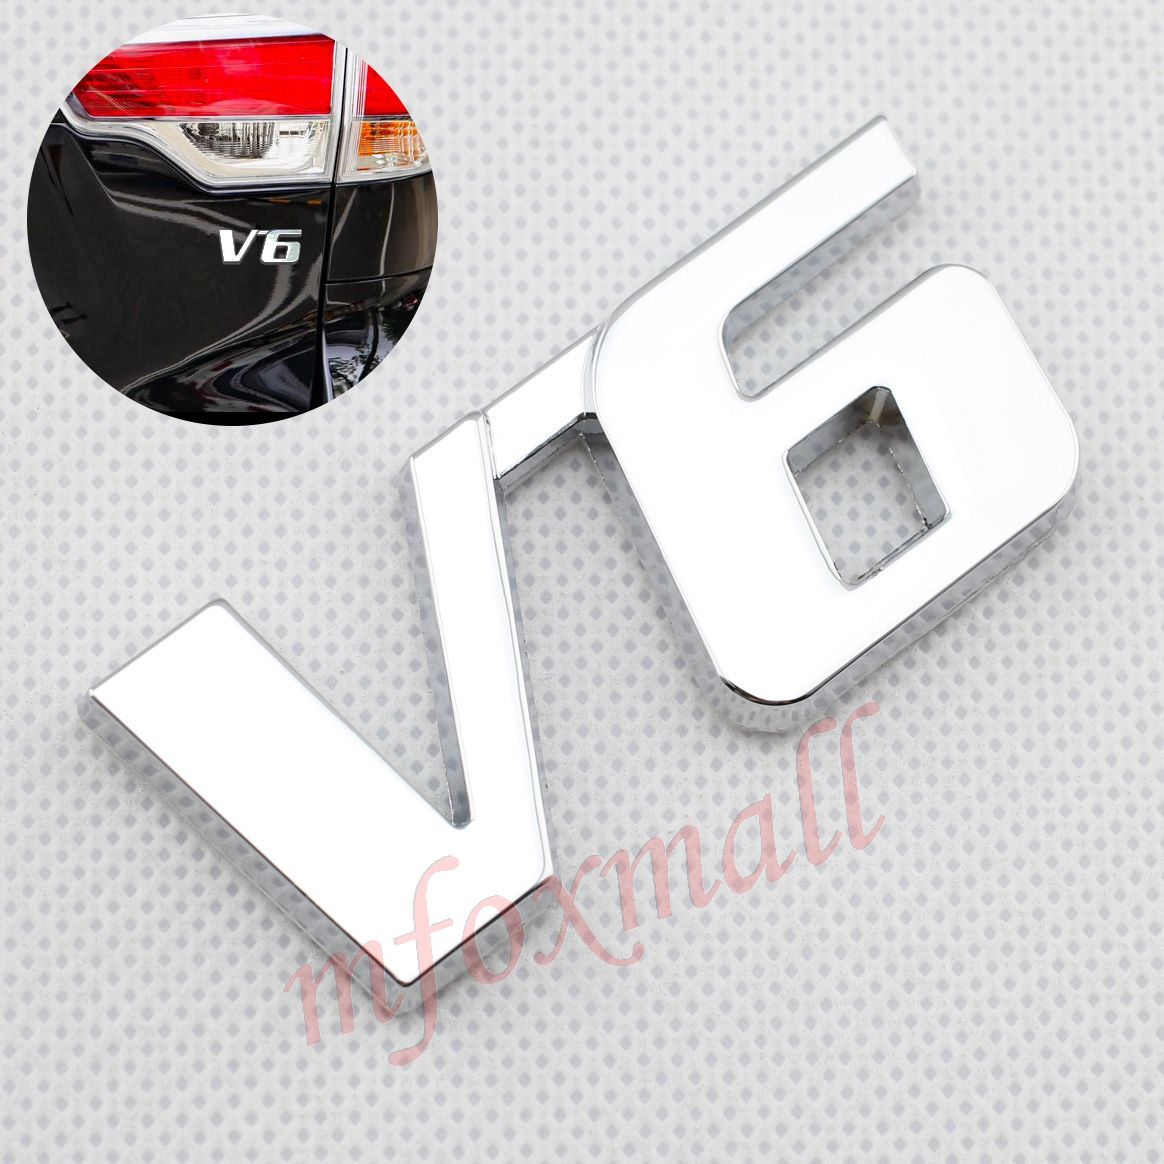 LIUYE 3D Metal Zinc Alloy V6 Badge V6 Engine Sign,Car tail labeling automobile Styling Decorative Accessories Black V6